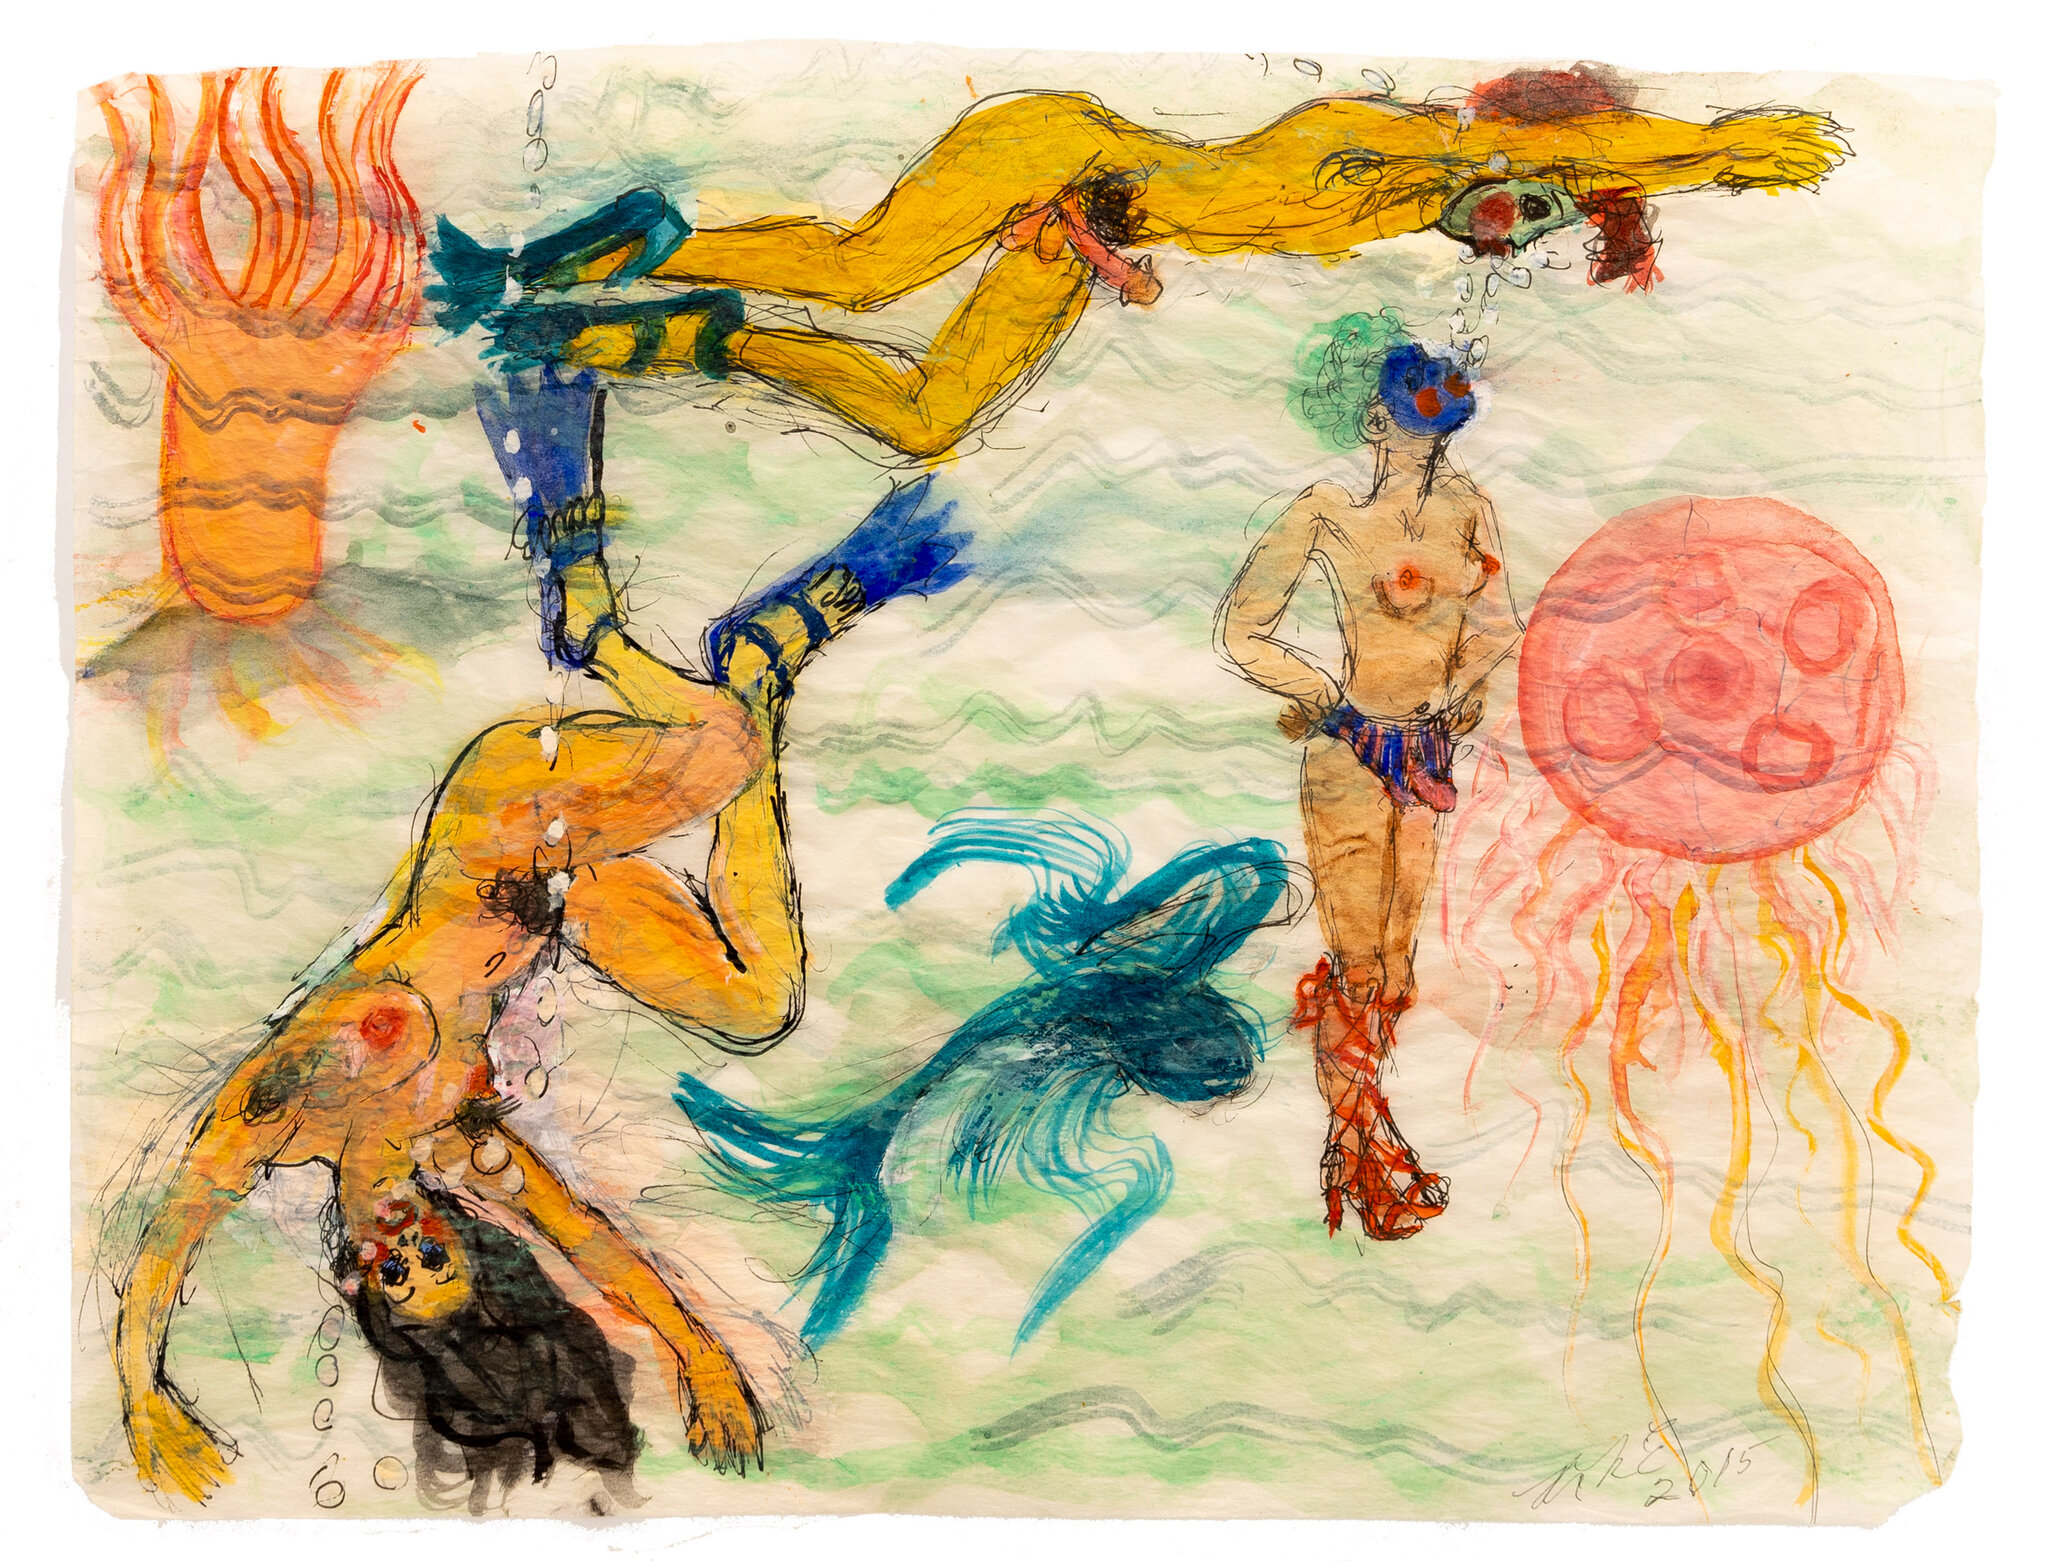 Martha Edelheit, Swimming with Jelly Fish, 2015